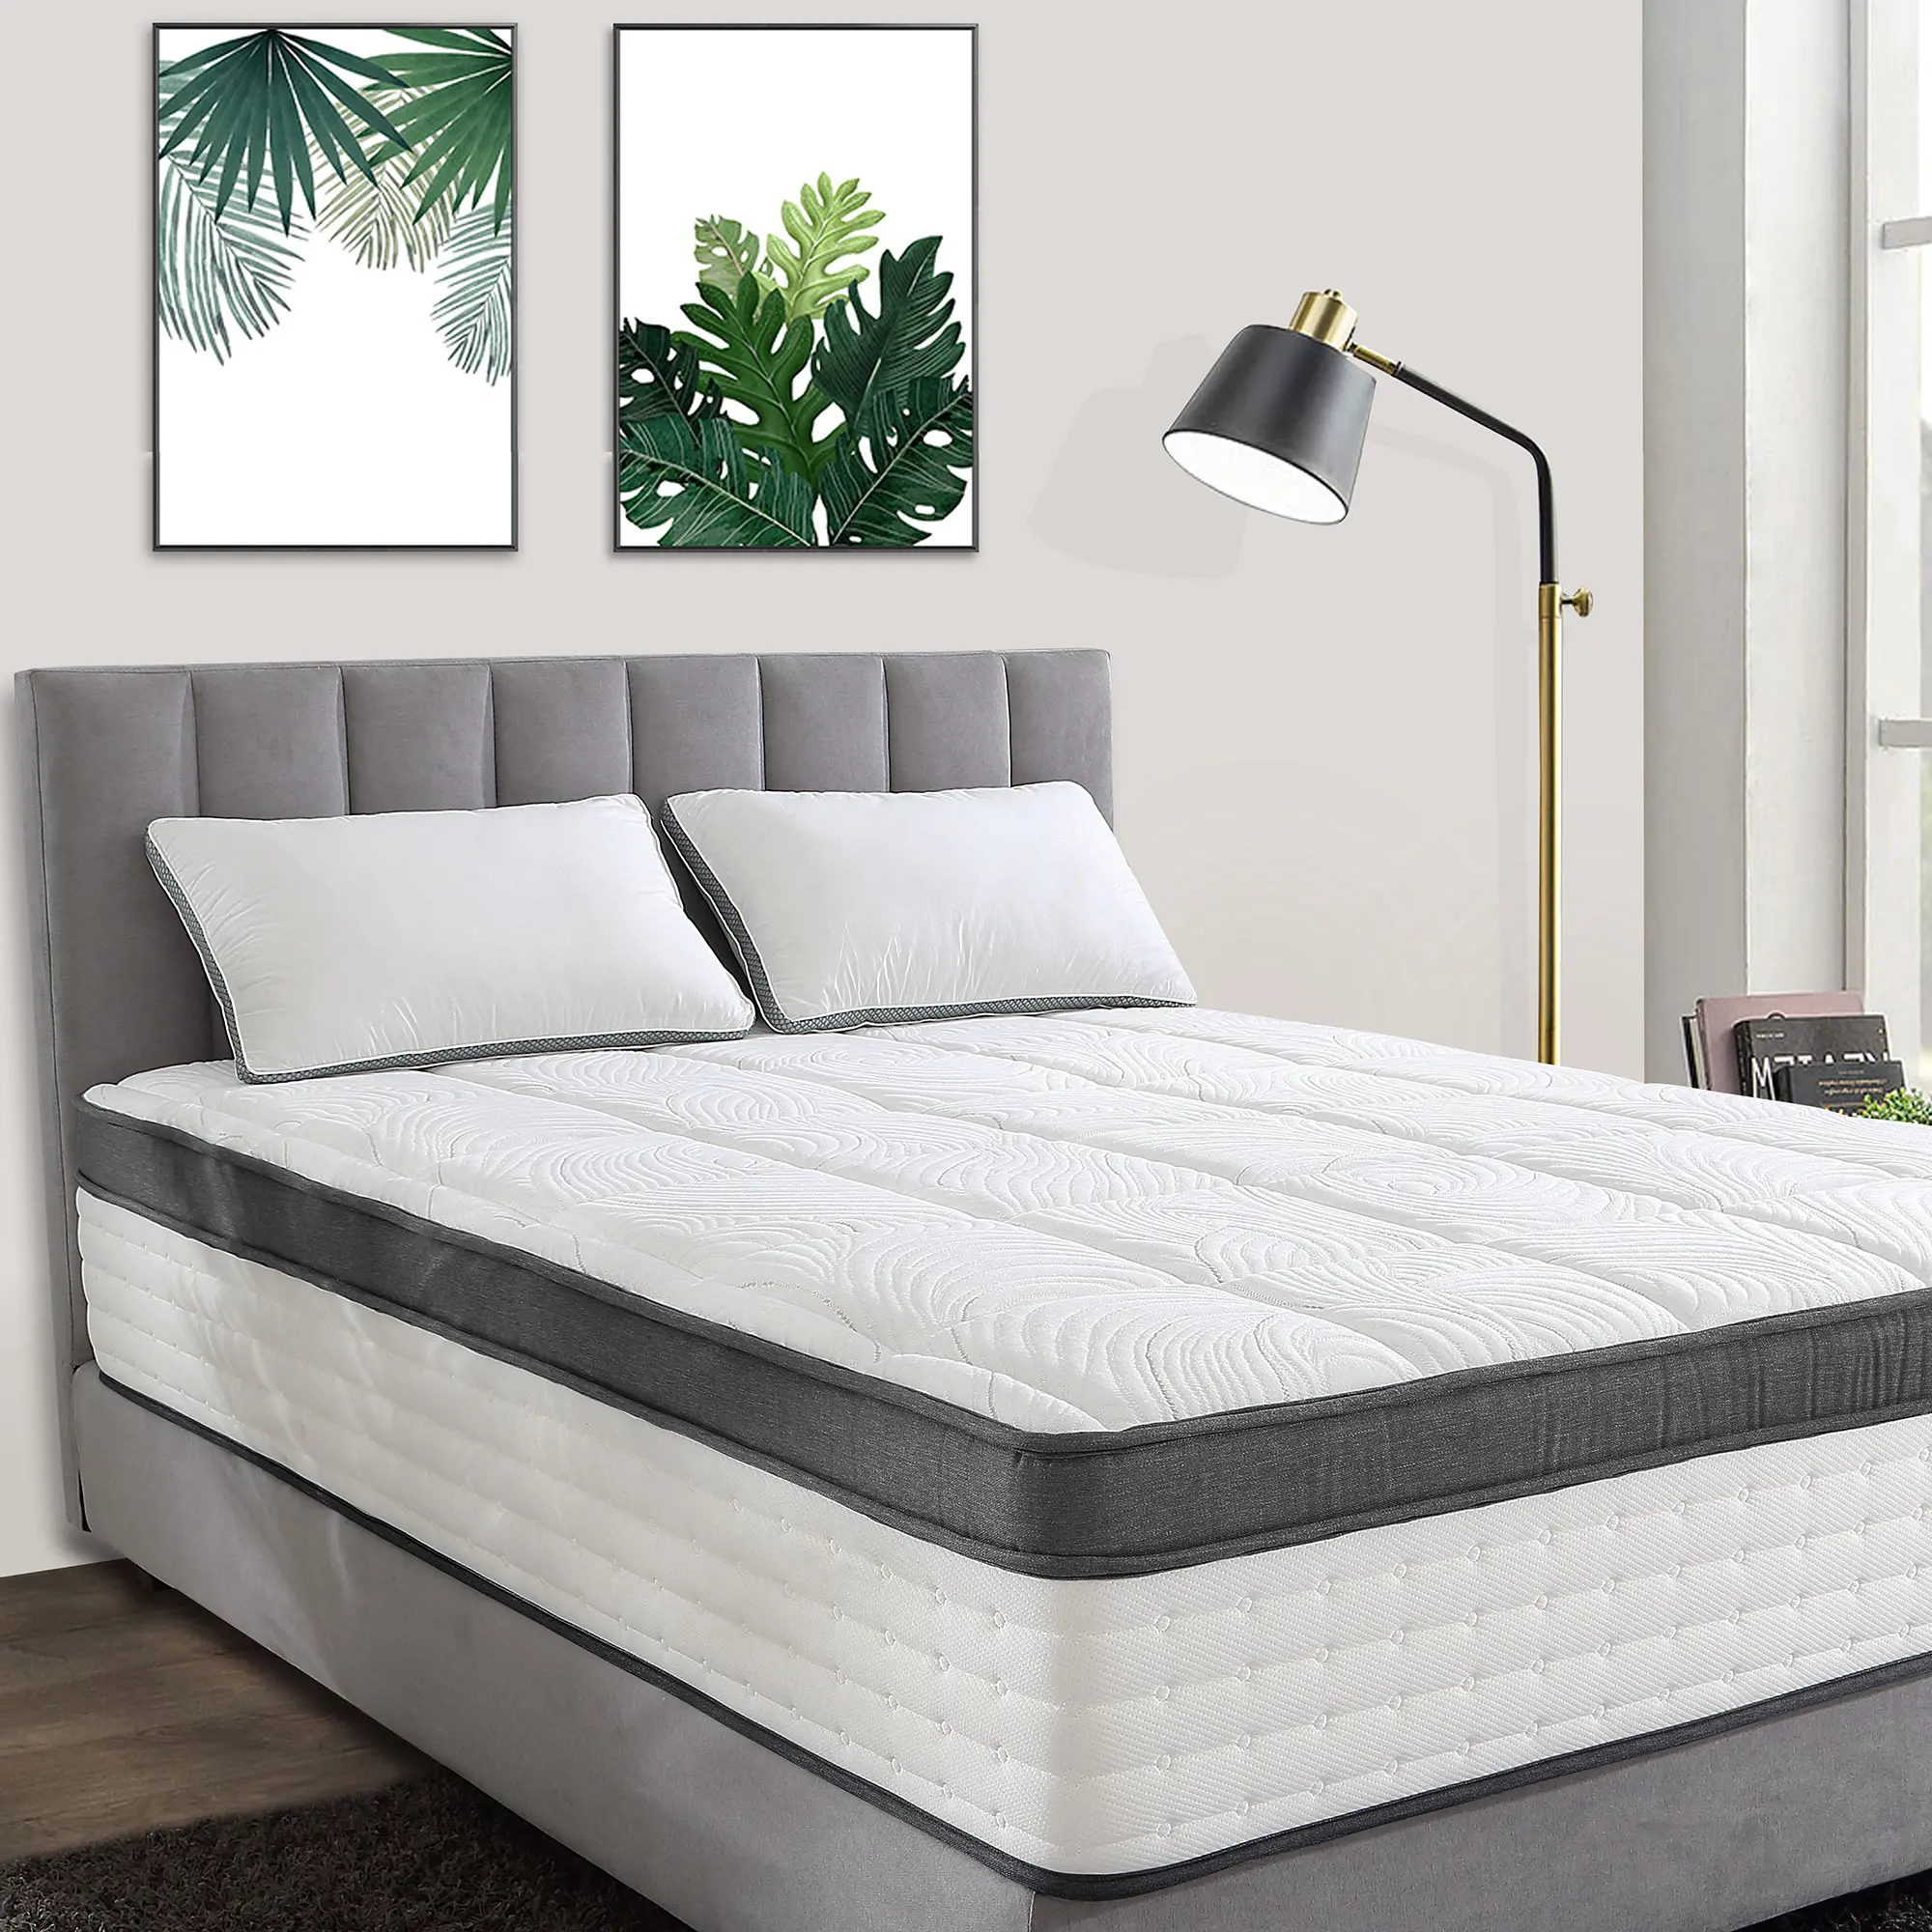 Comfortable organic latex mattress 100% natural super soft foam top pocket spring mattress